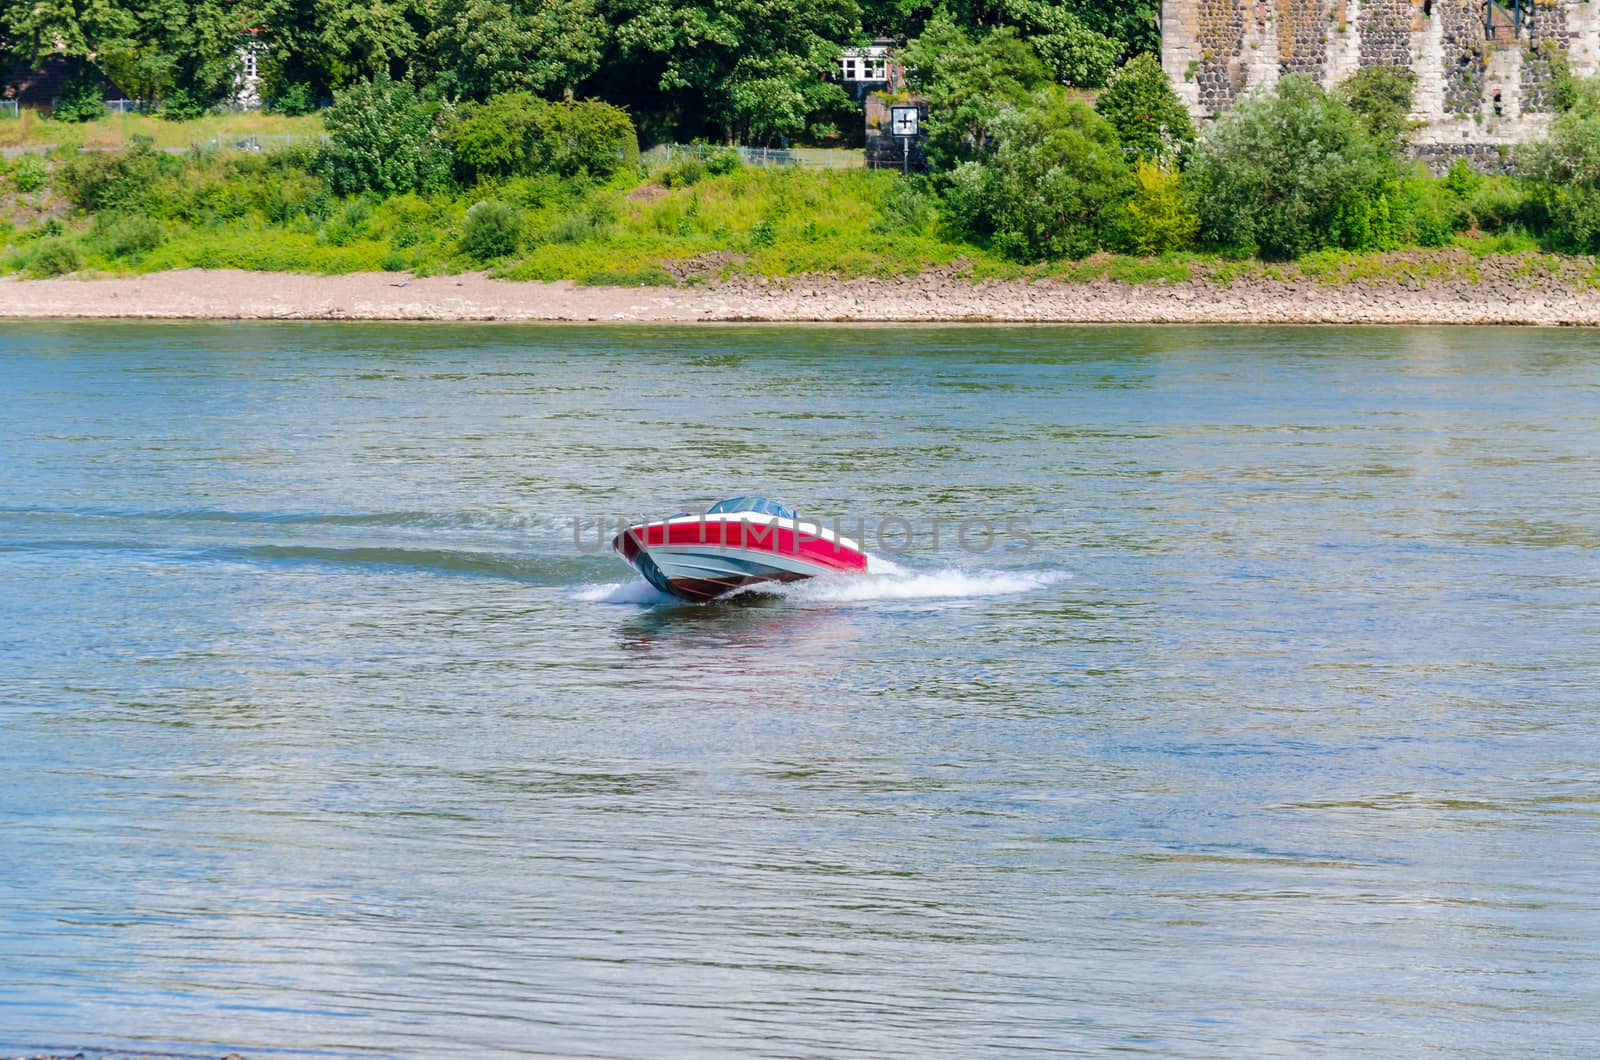 Speedboat cruising in the lake.
